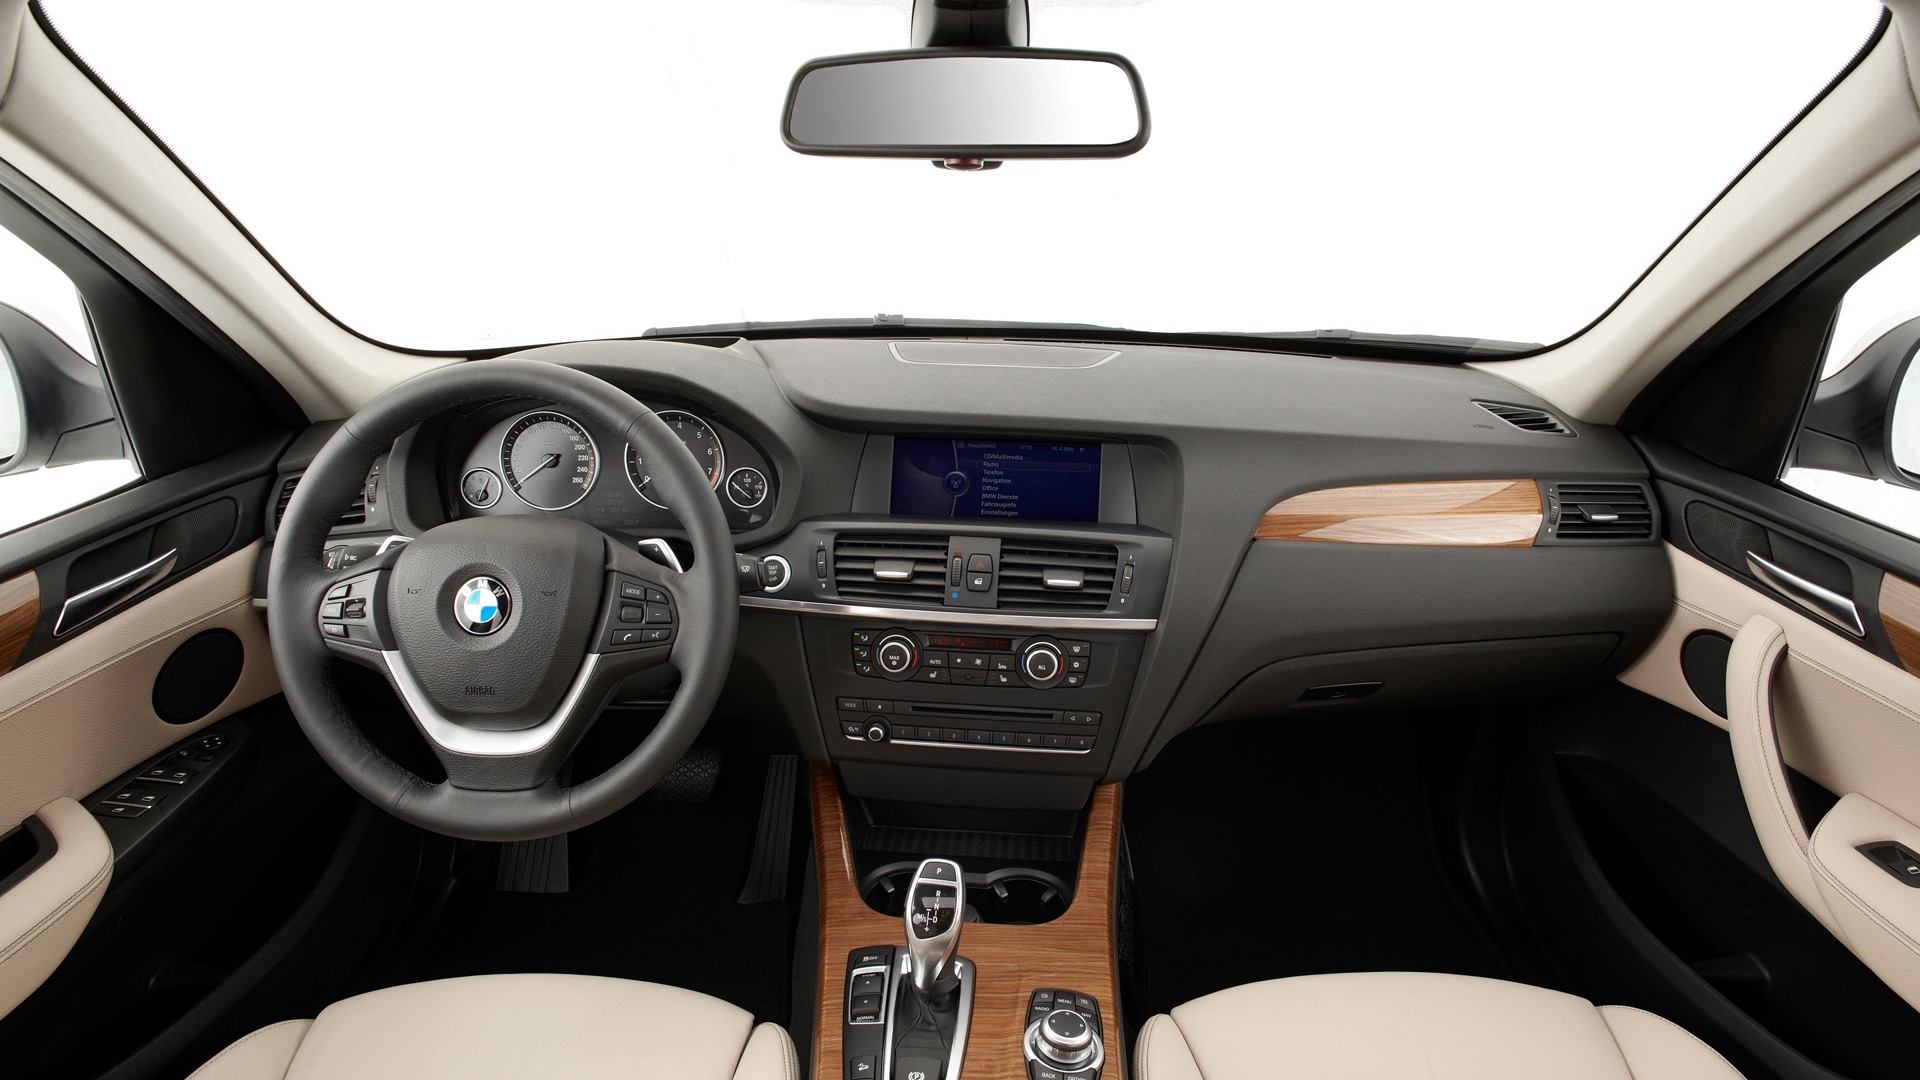 BMW X3 xDrive35i - 2010 宝马(一)39 - 1920x1080